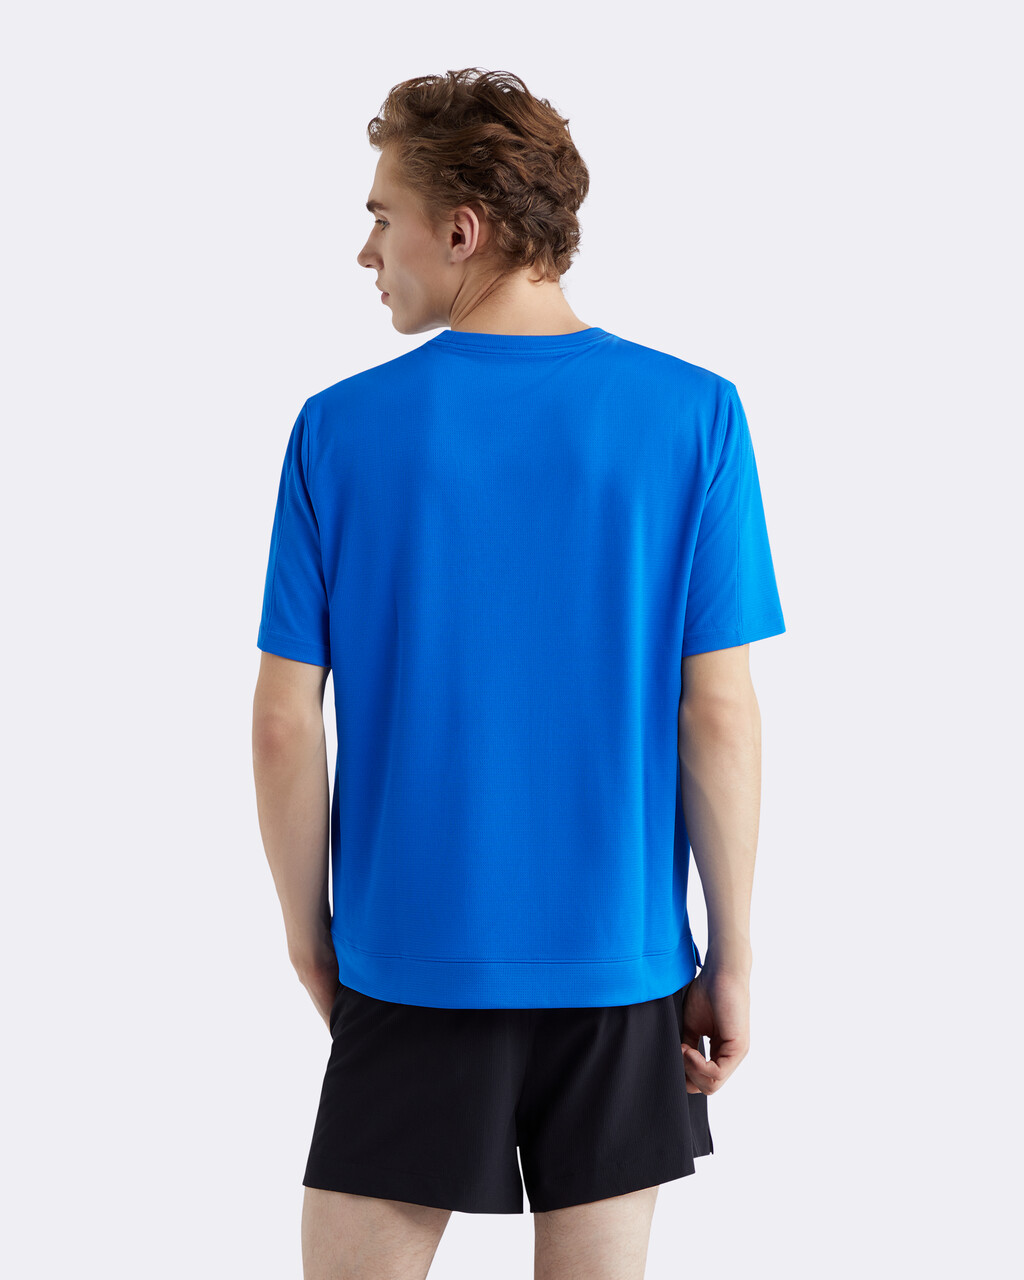 紋理健身T恤, LAPIS BLUE, hi-res